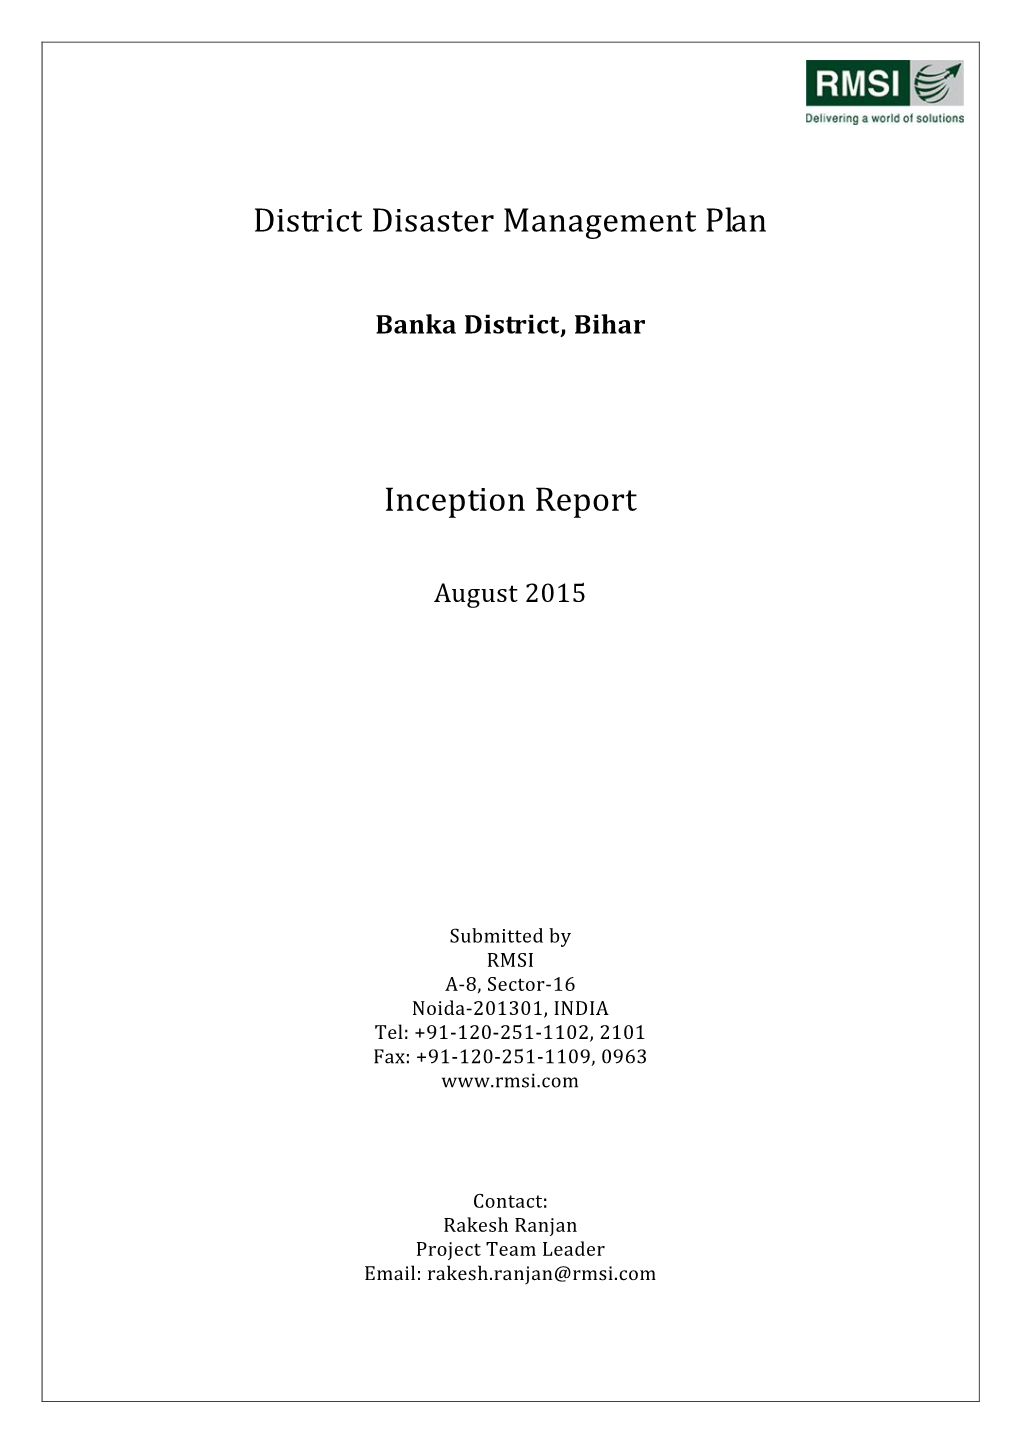 BSDMA DDMA Inception Report